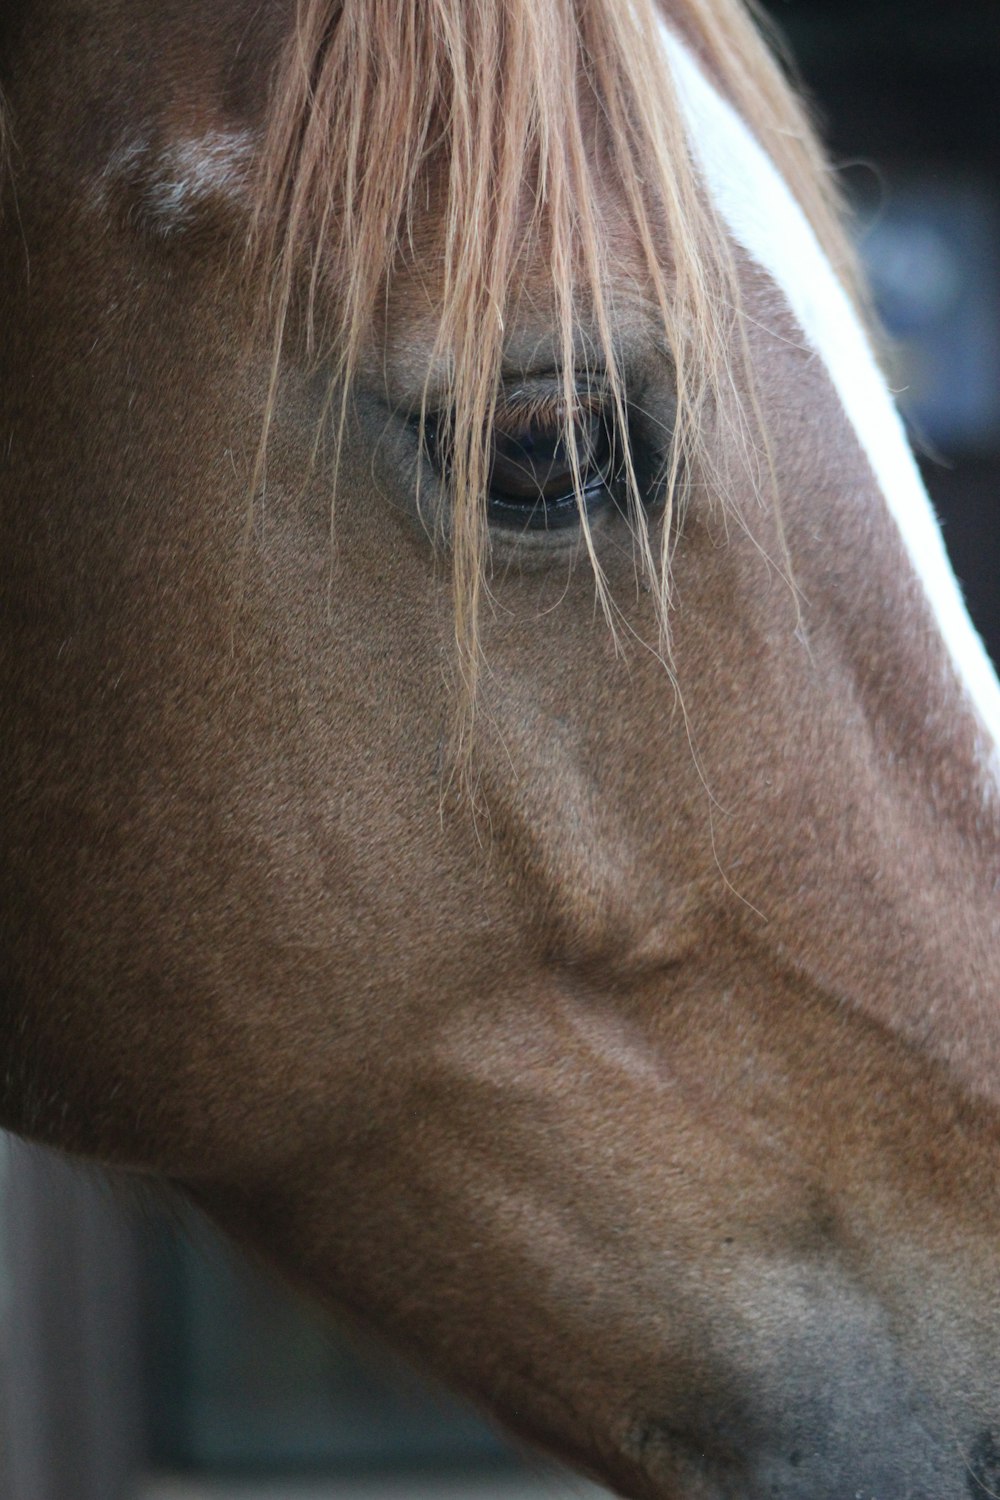 close-up photo of horse head